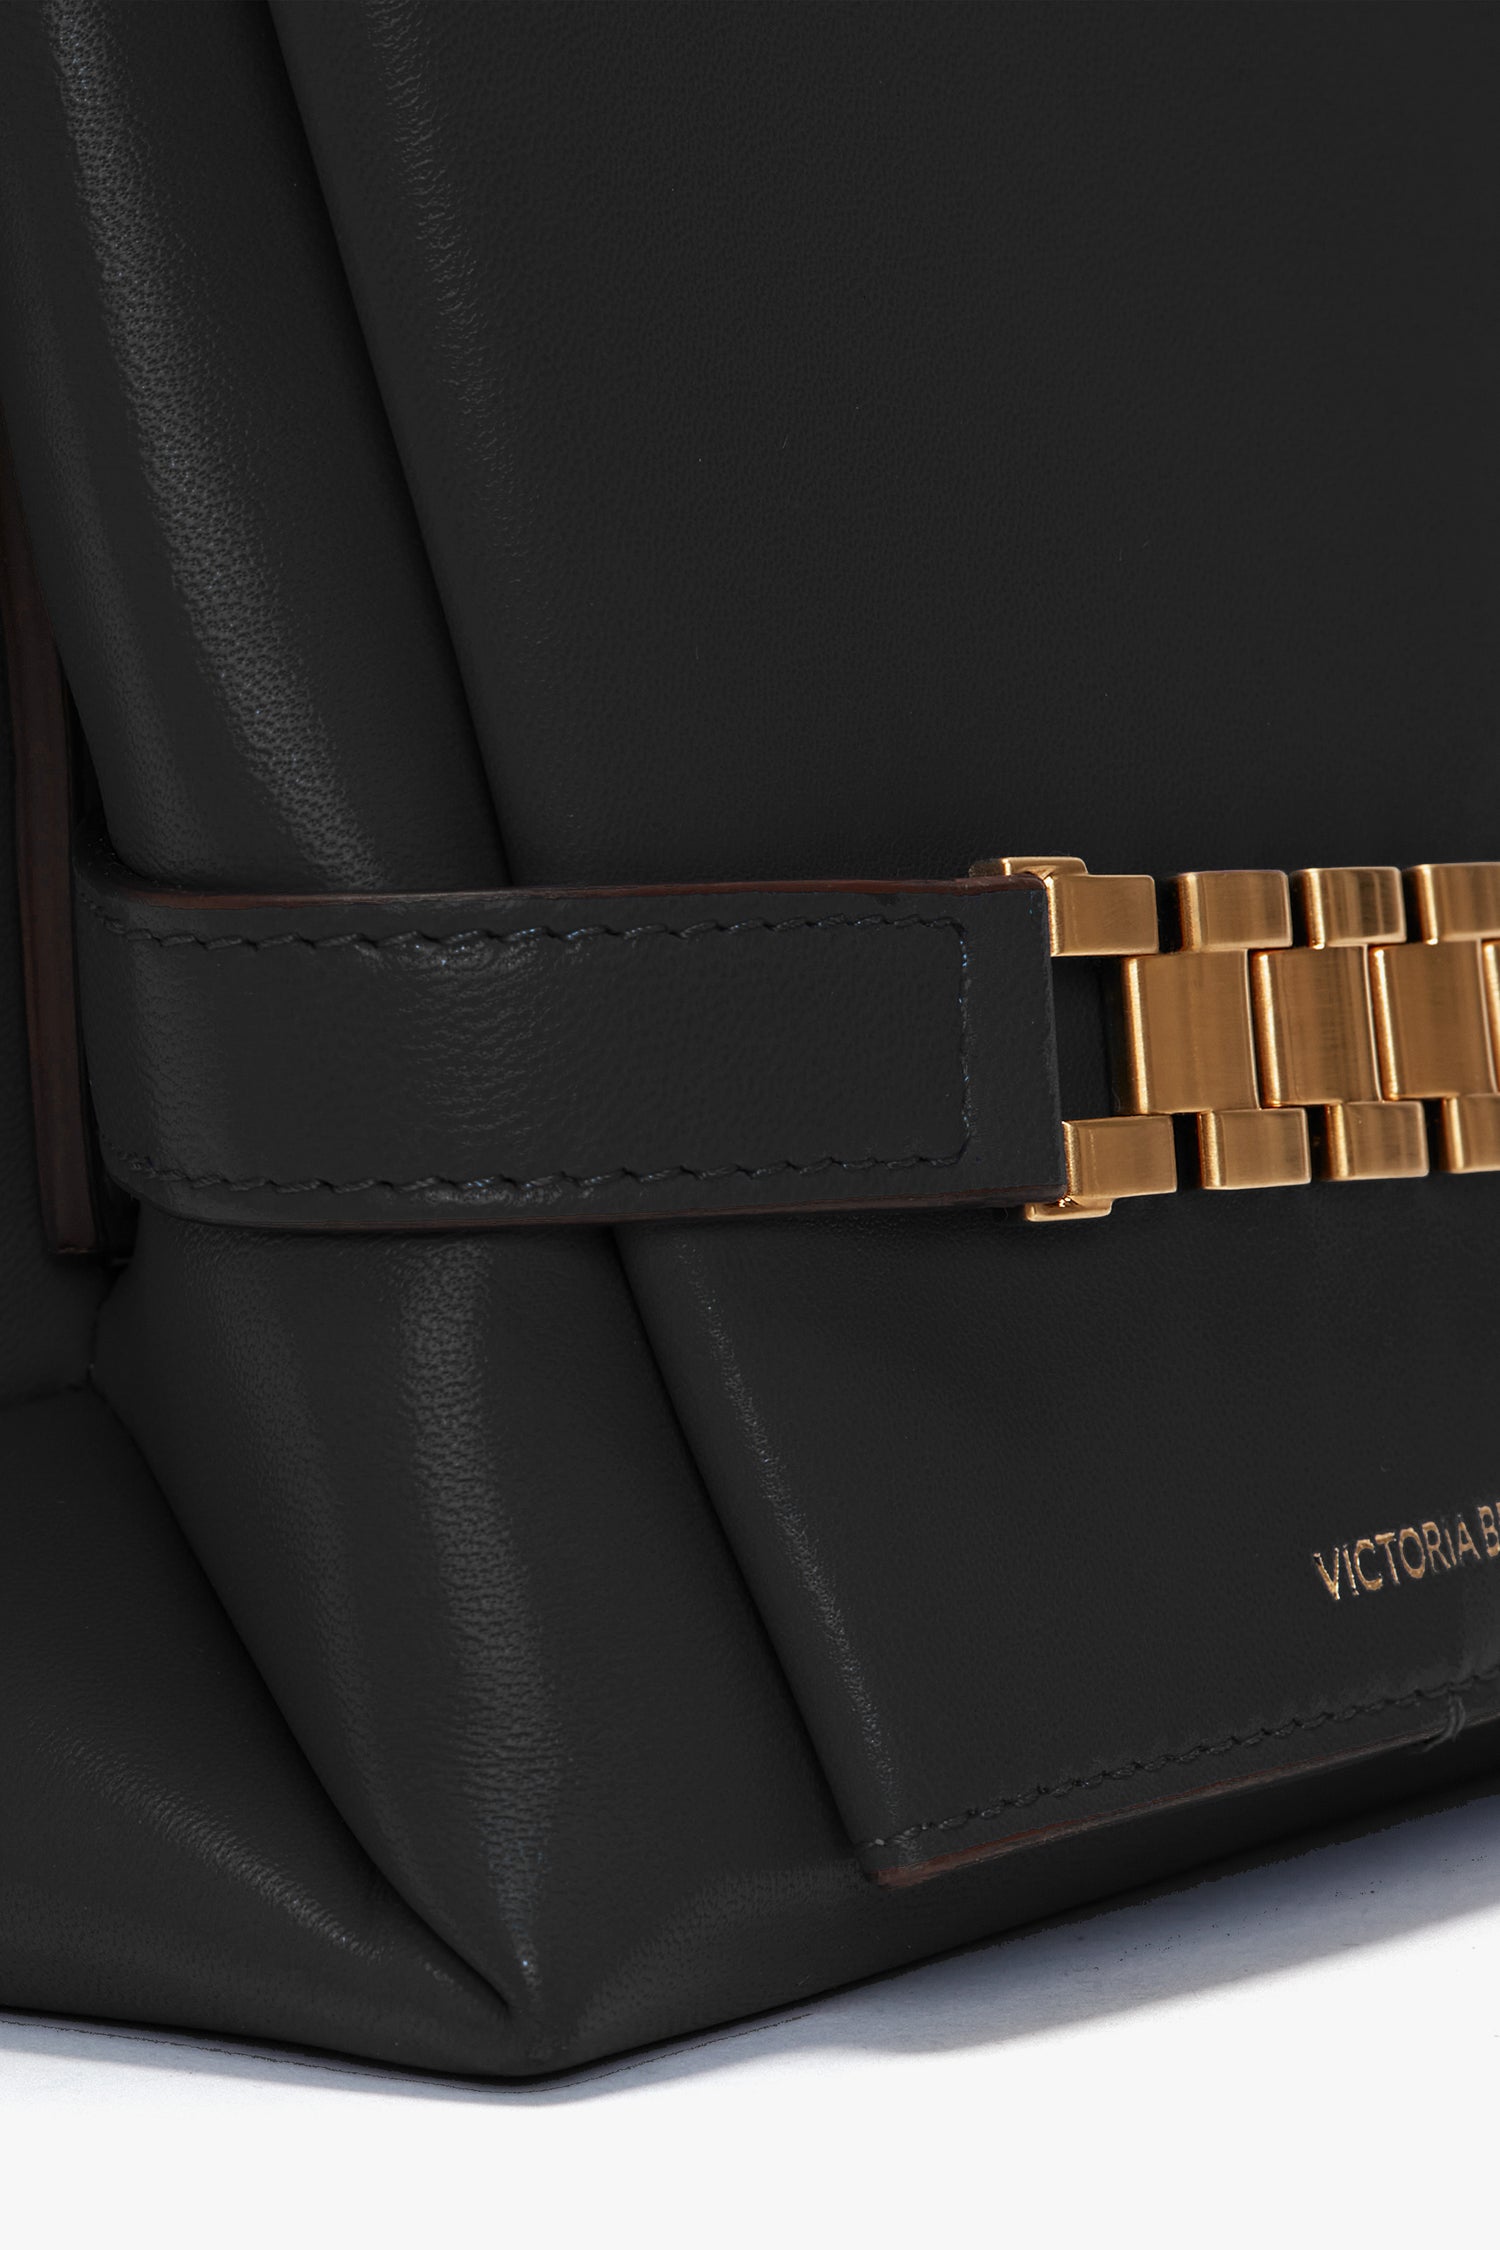 Buy Victoria's Secret Wristlet Strap from the Next UK online shop